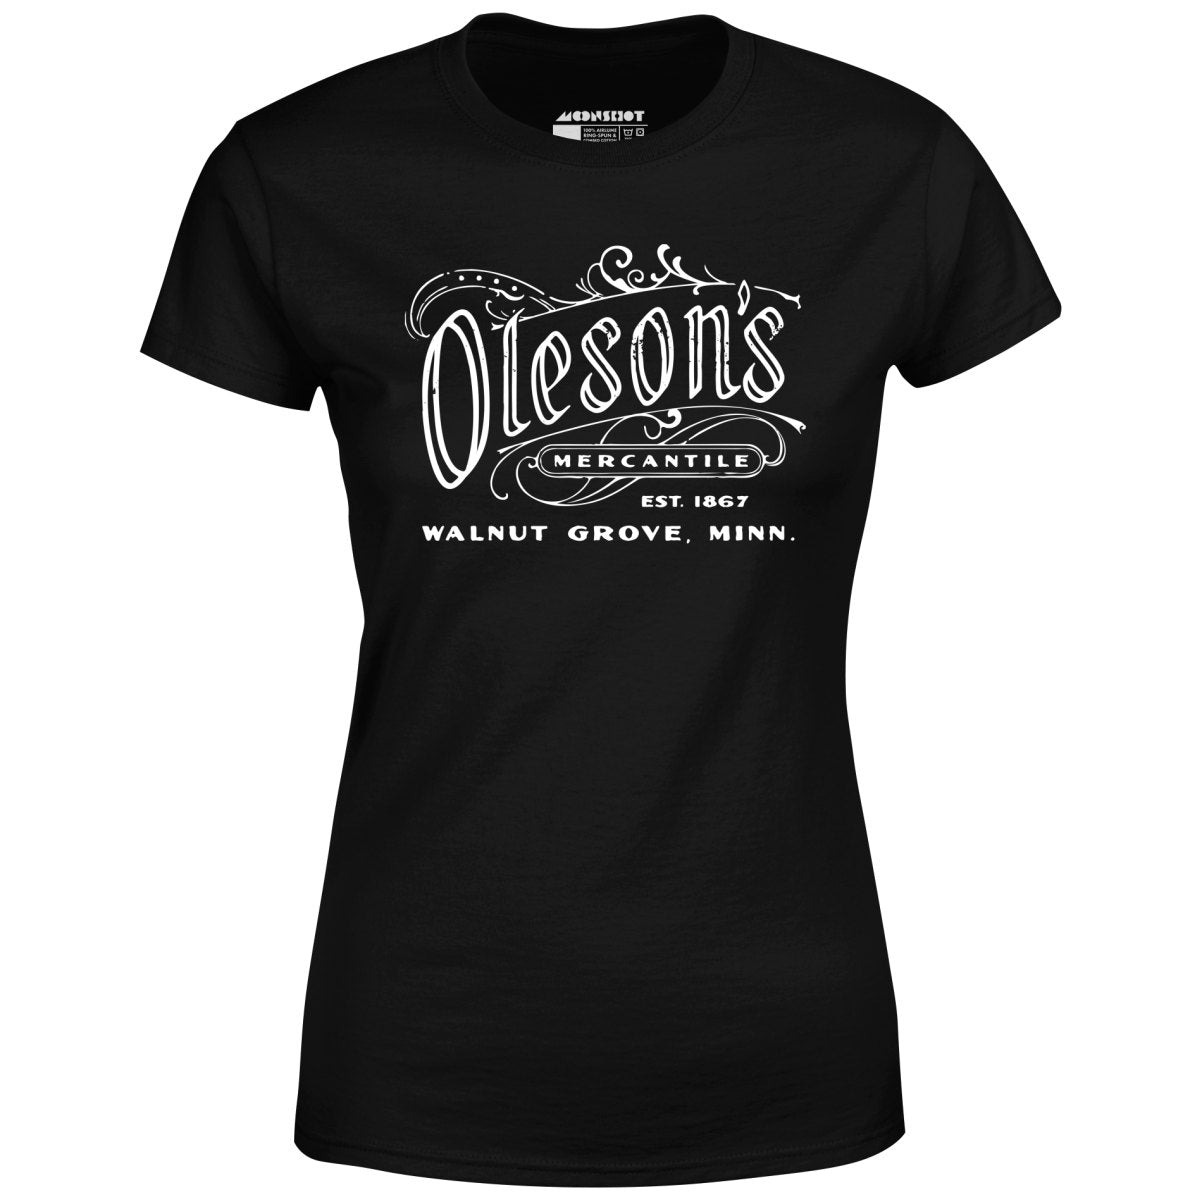 Oleson's Mercantile - Little House on the Prairie - Women's T-Shirt